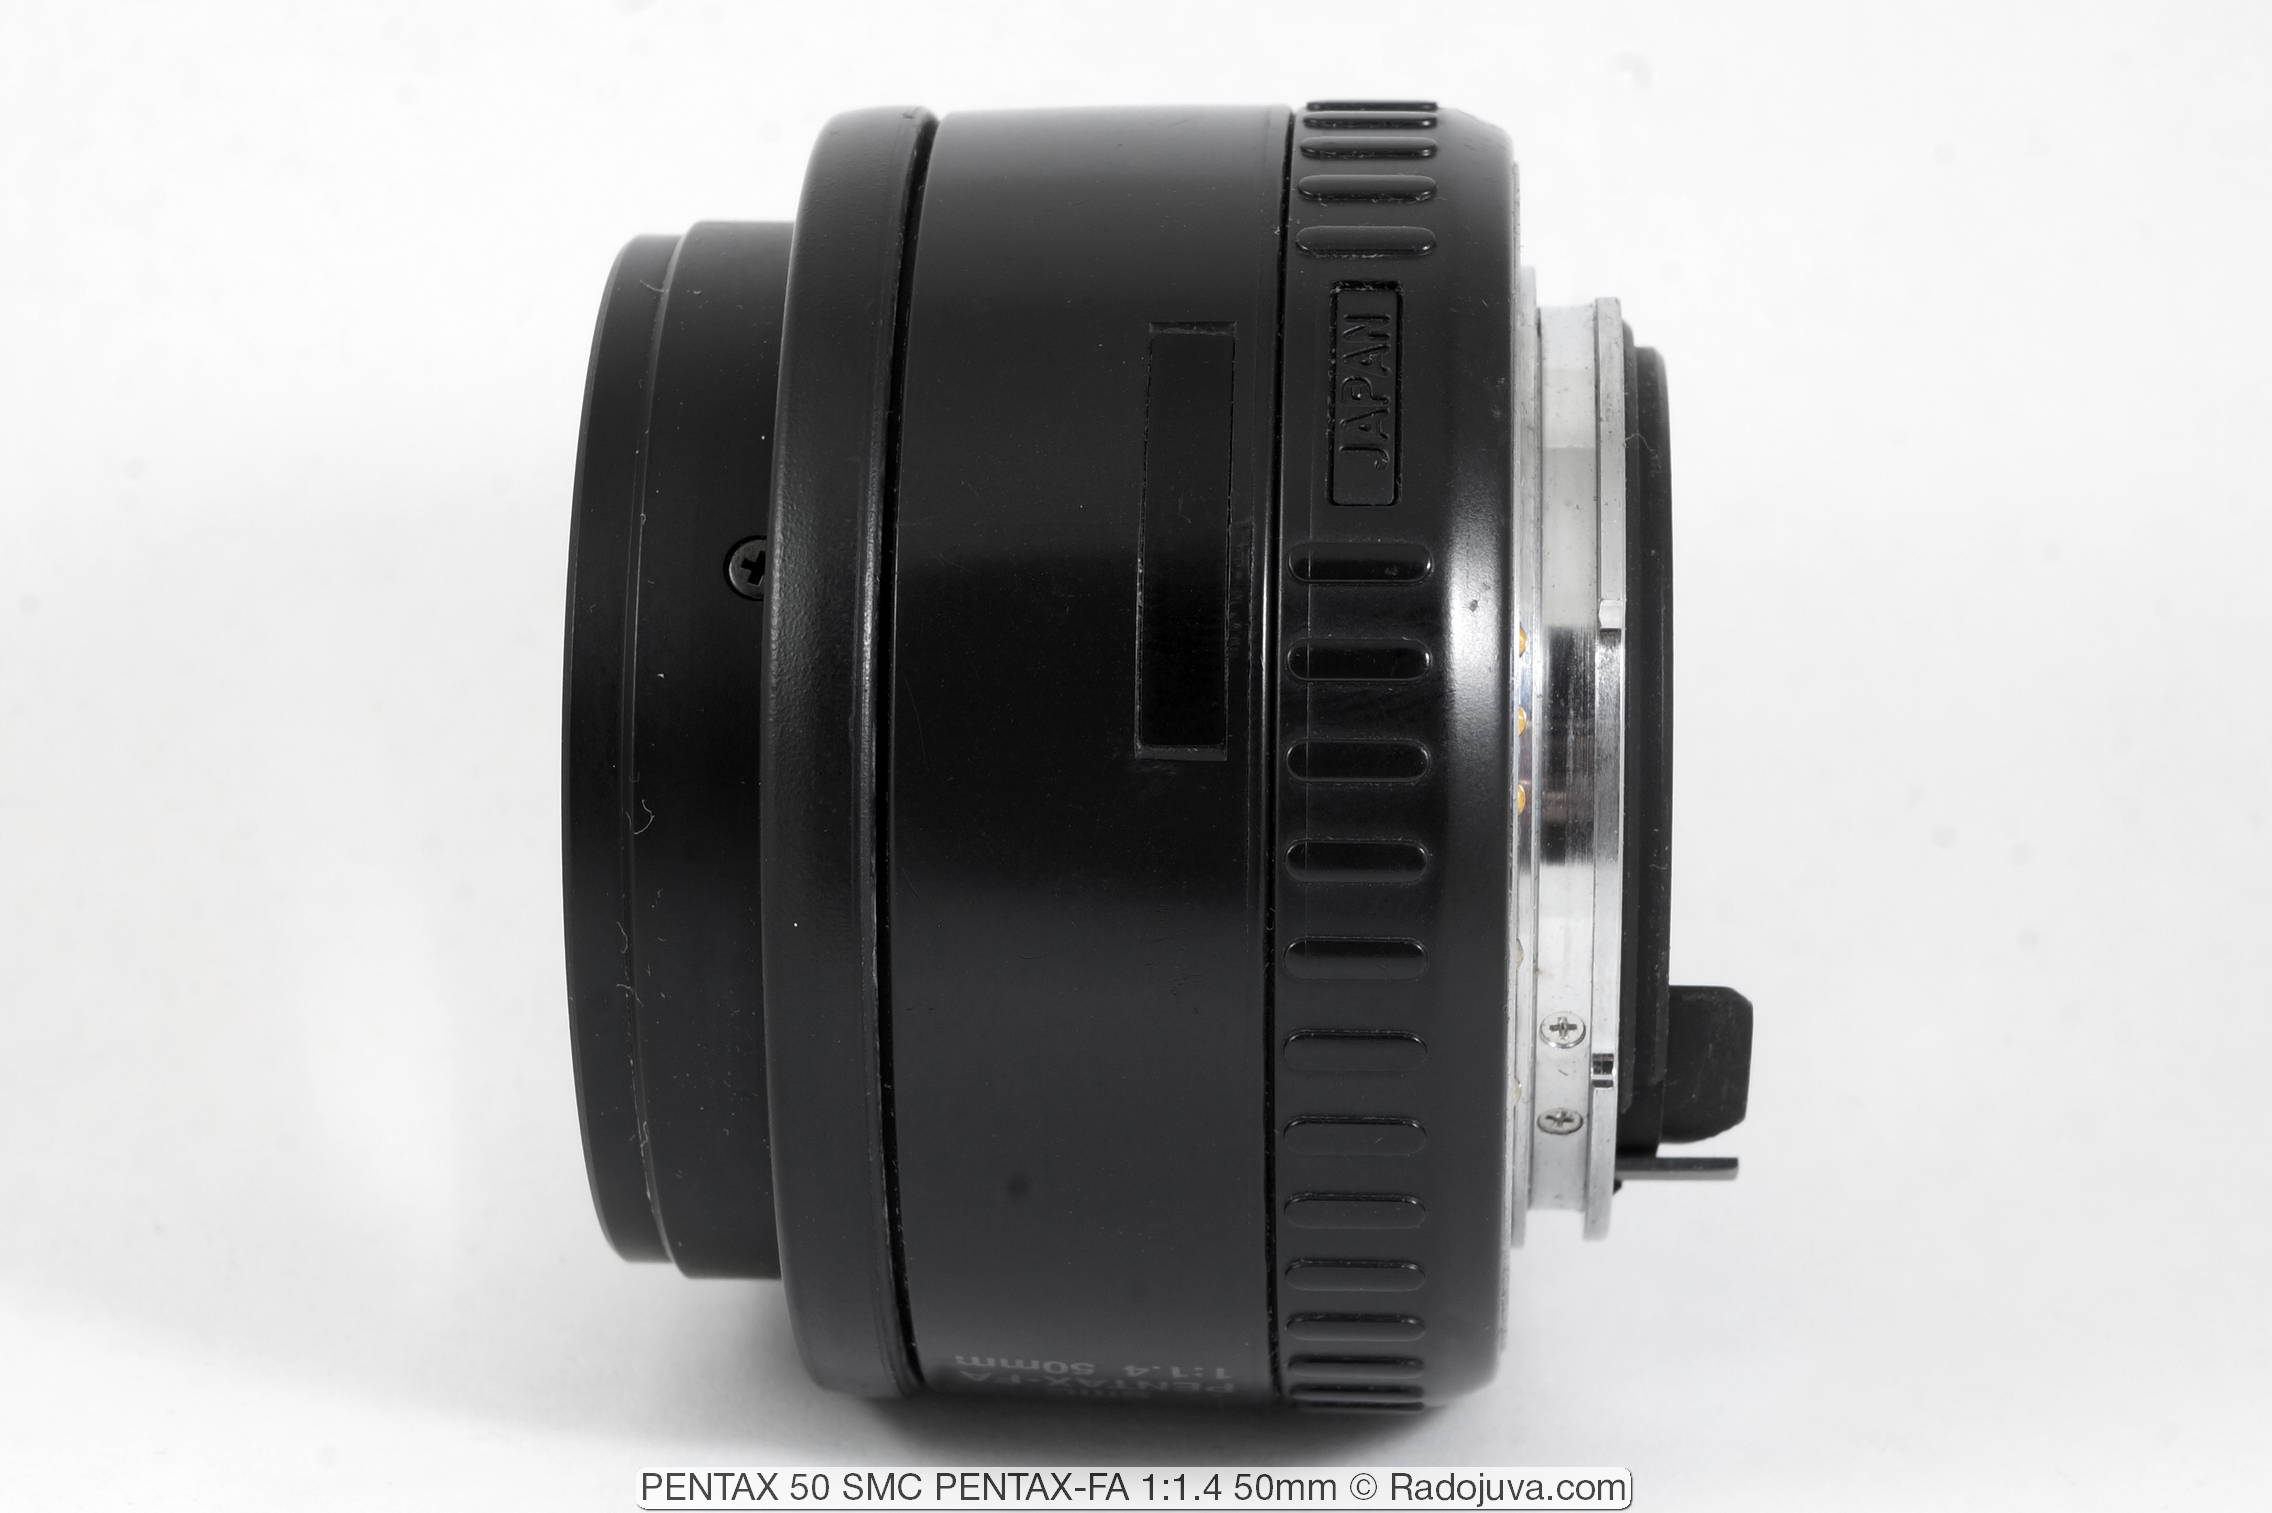 PENTAX 50 SMC PENTAX-FA 1:1.4 50mm